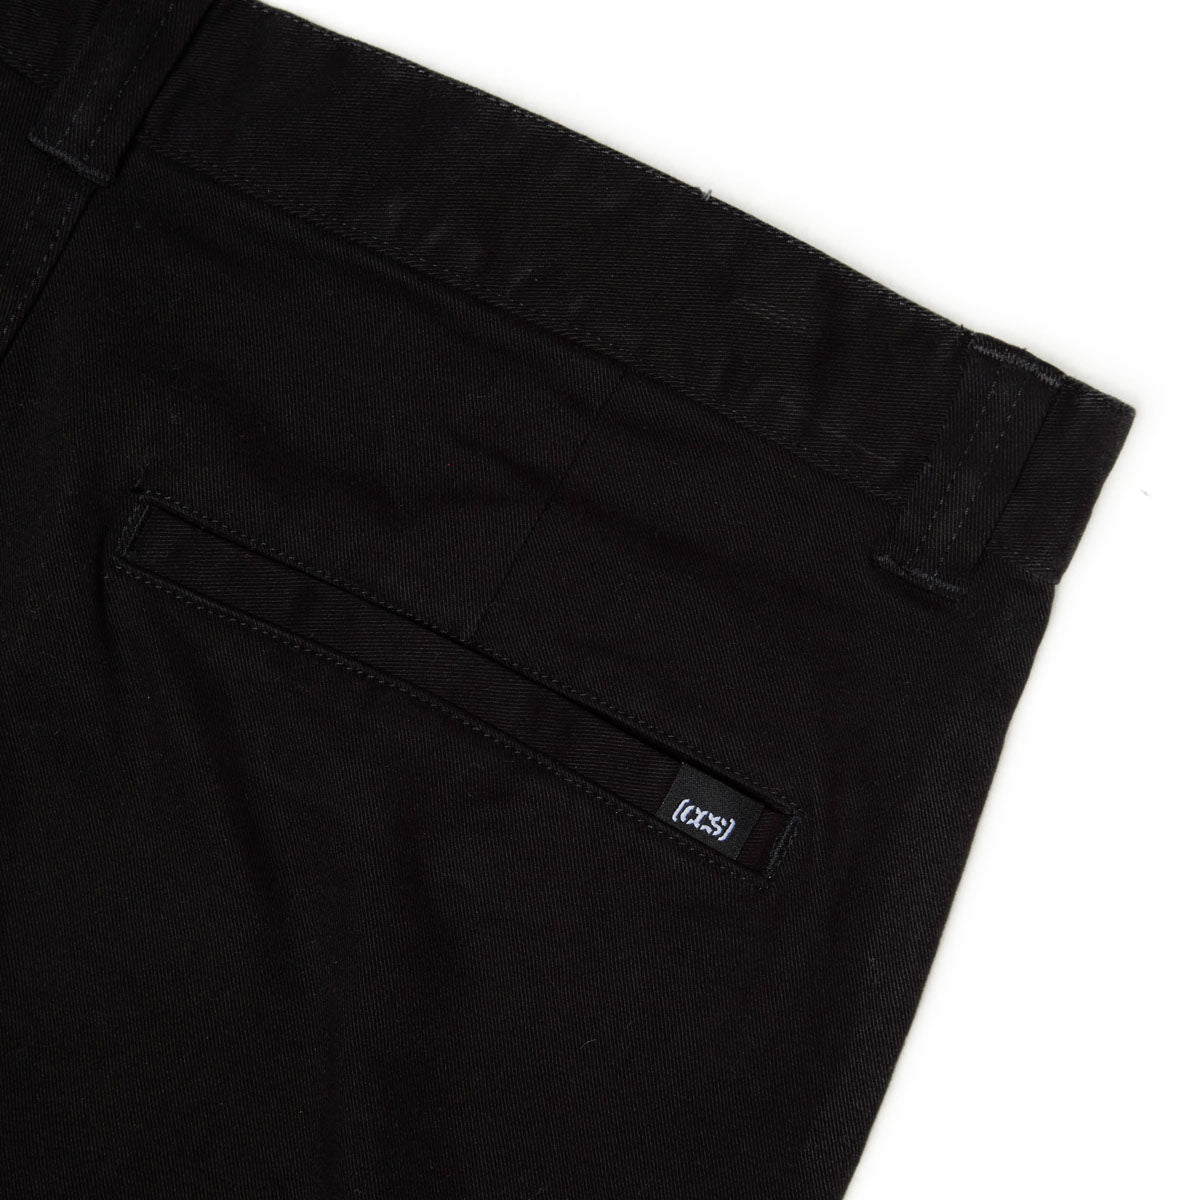 CCS Standard Plus Slim Chino Pants - Black image 6